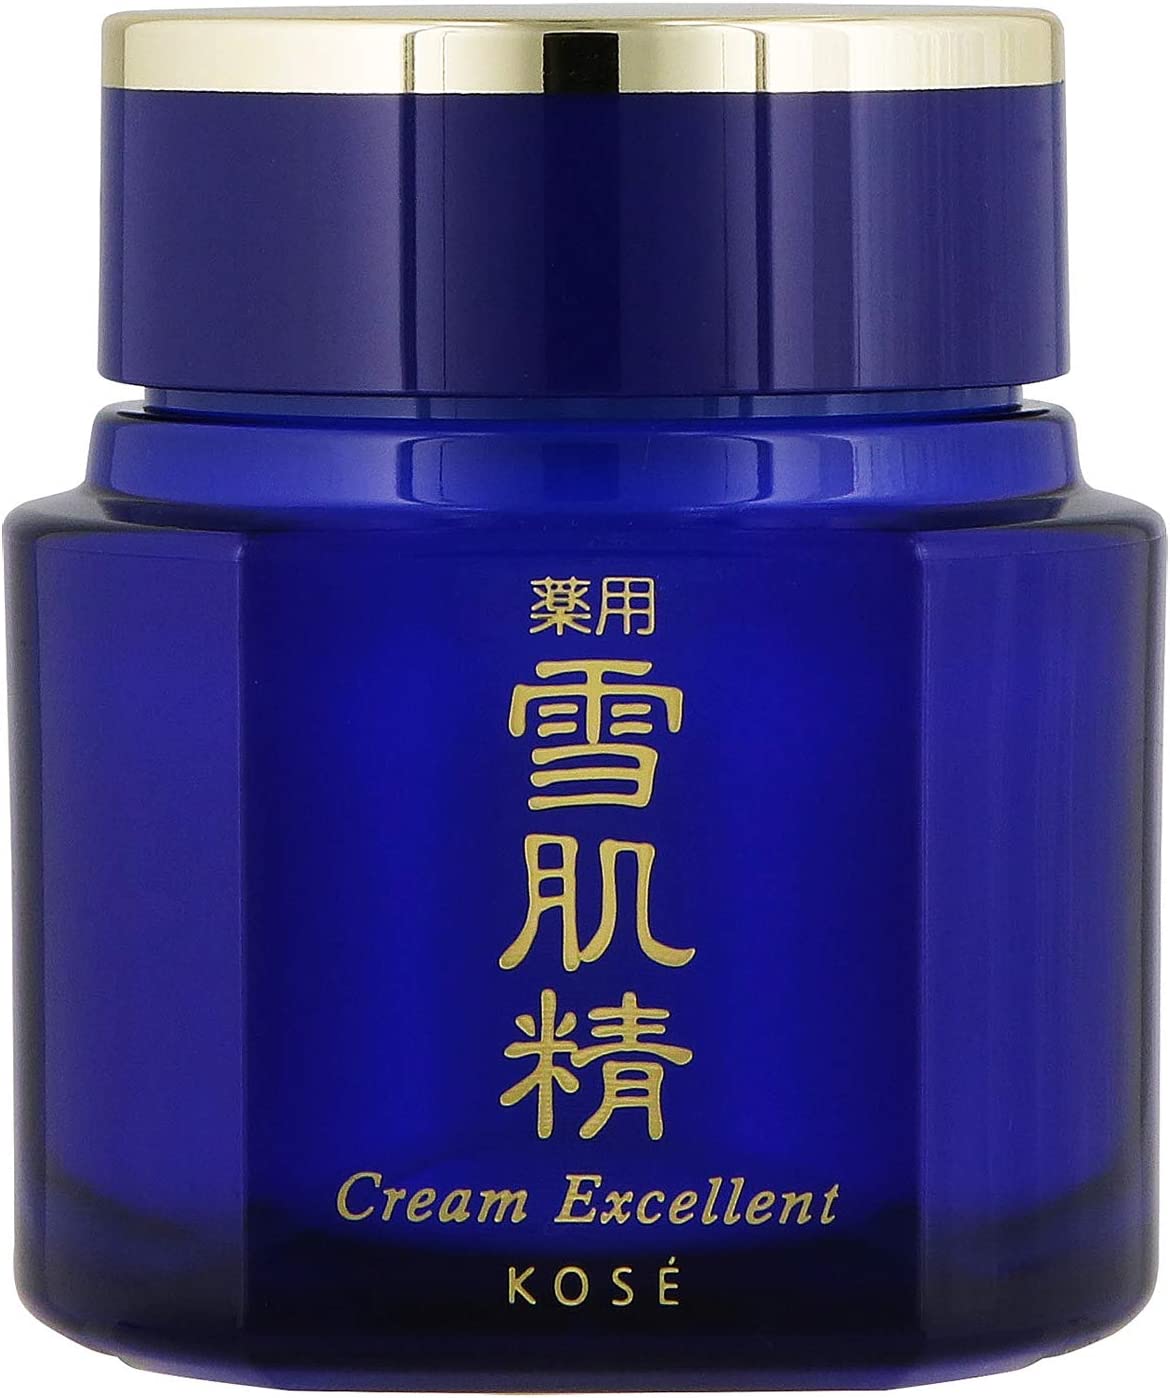 Sekkisei Cream Excellent 50g (x 1)